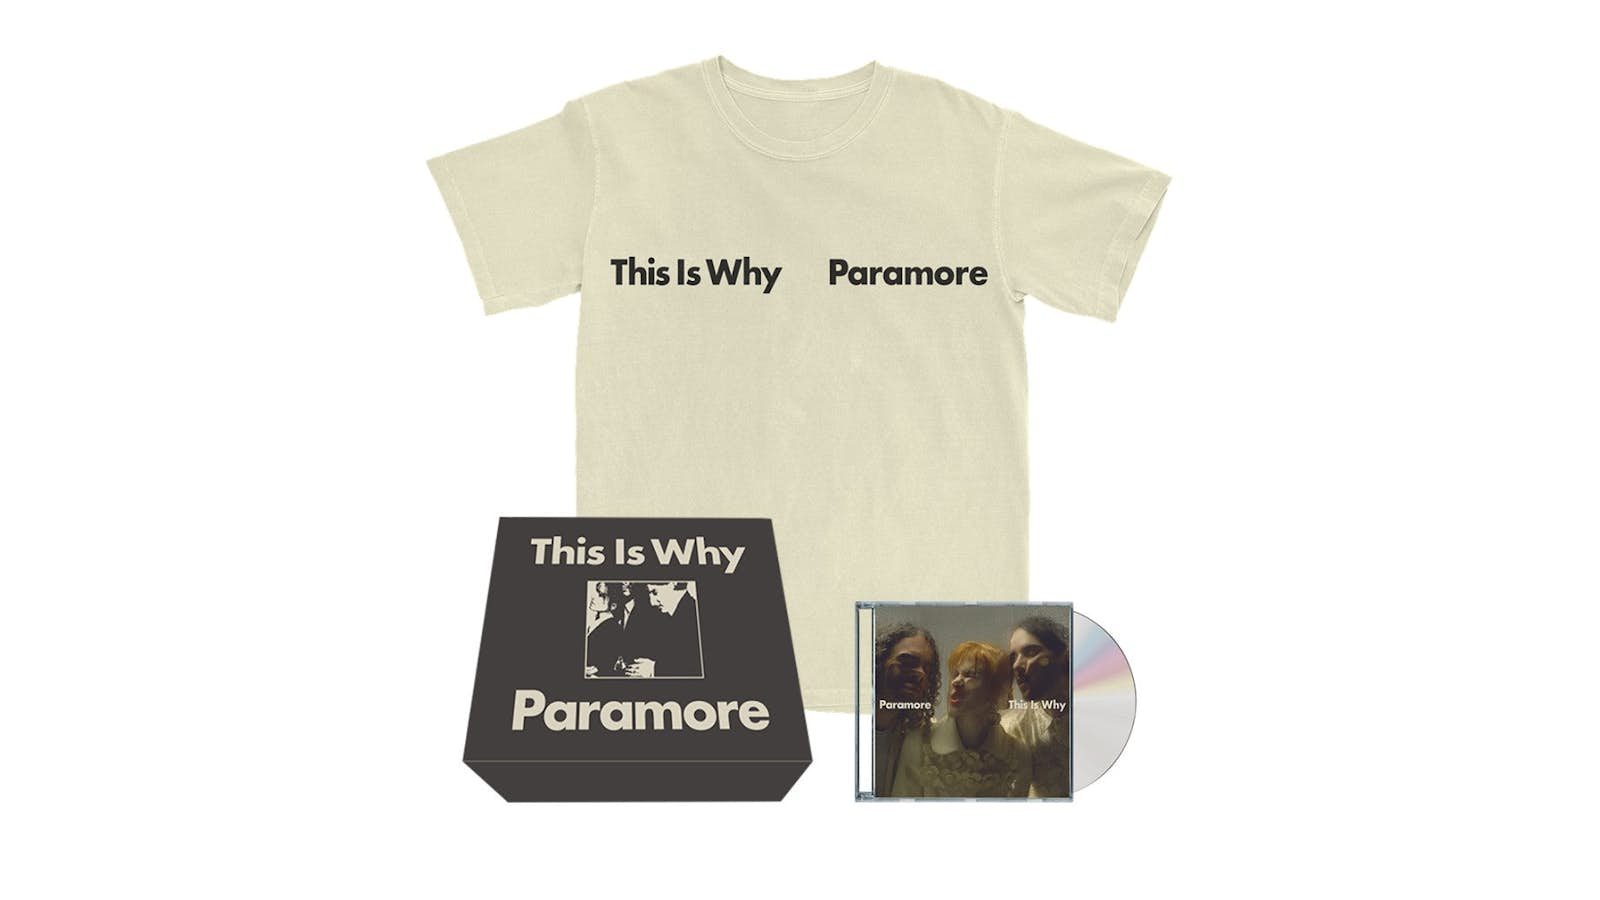 Paramore Printed Graphic Airbrush T-shirt